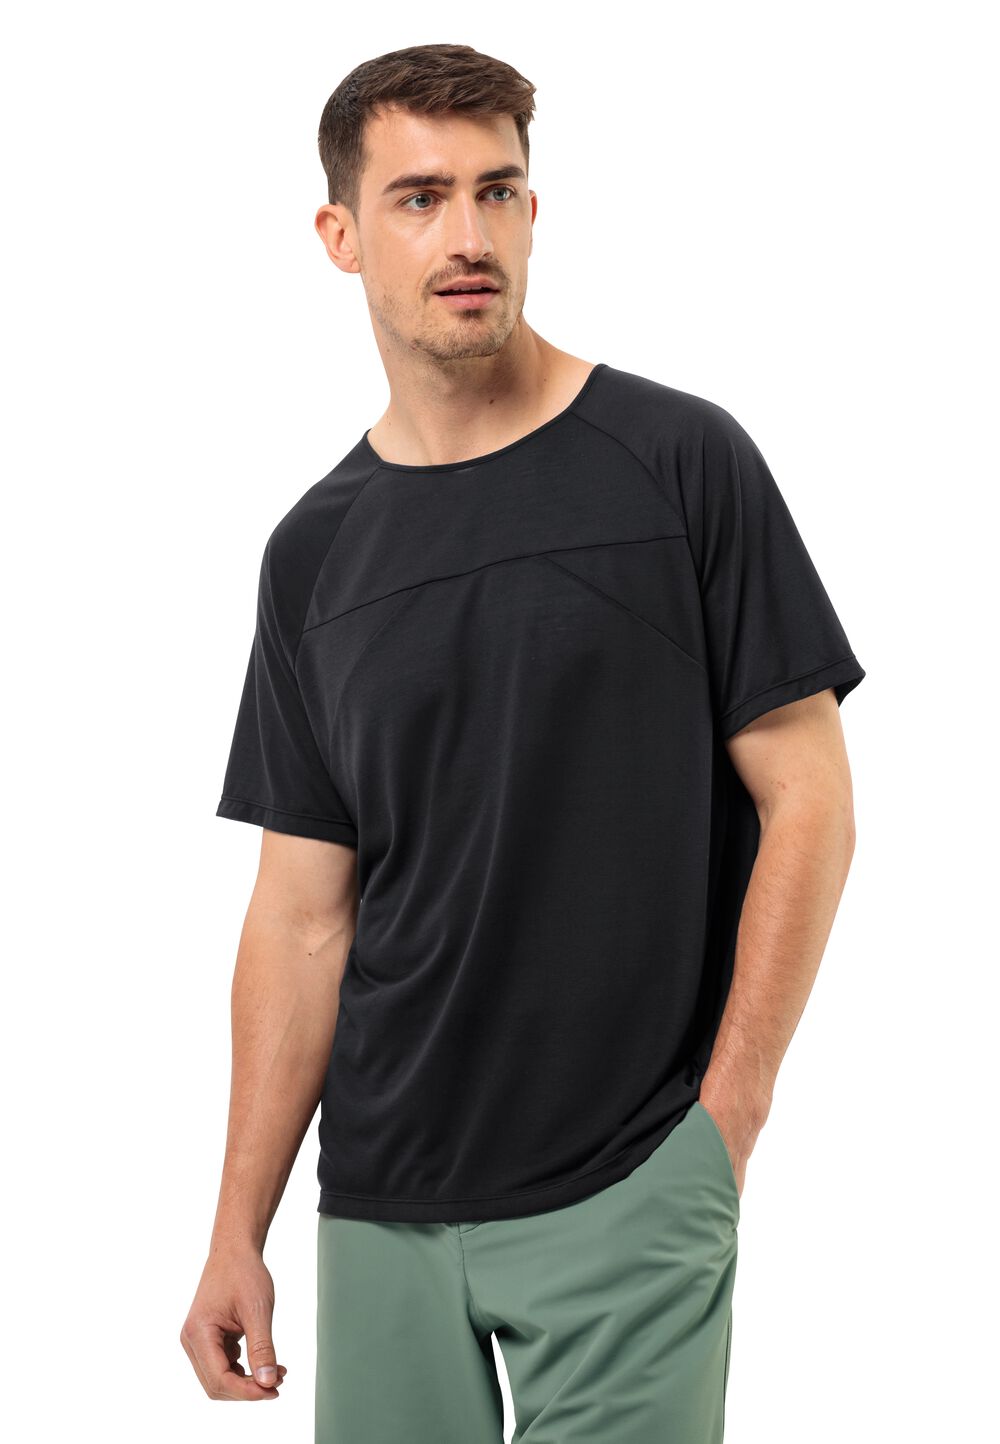 Jack Wolfskin Wanderword T-Shirt Men Functioneel shirt Heren L zwart granite black